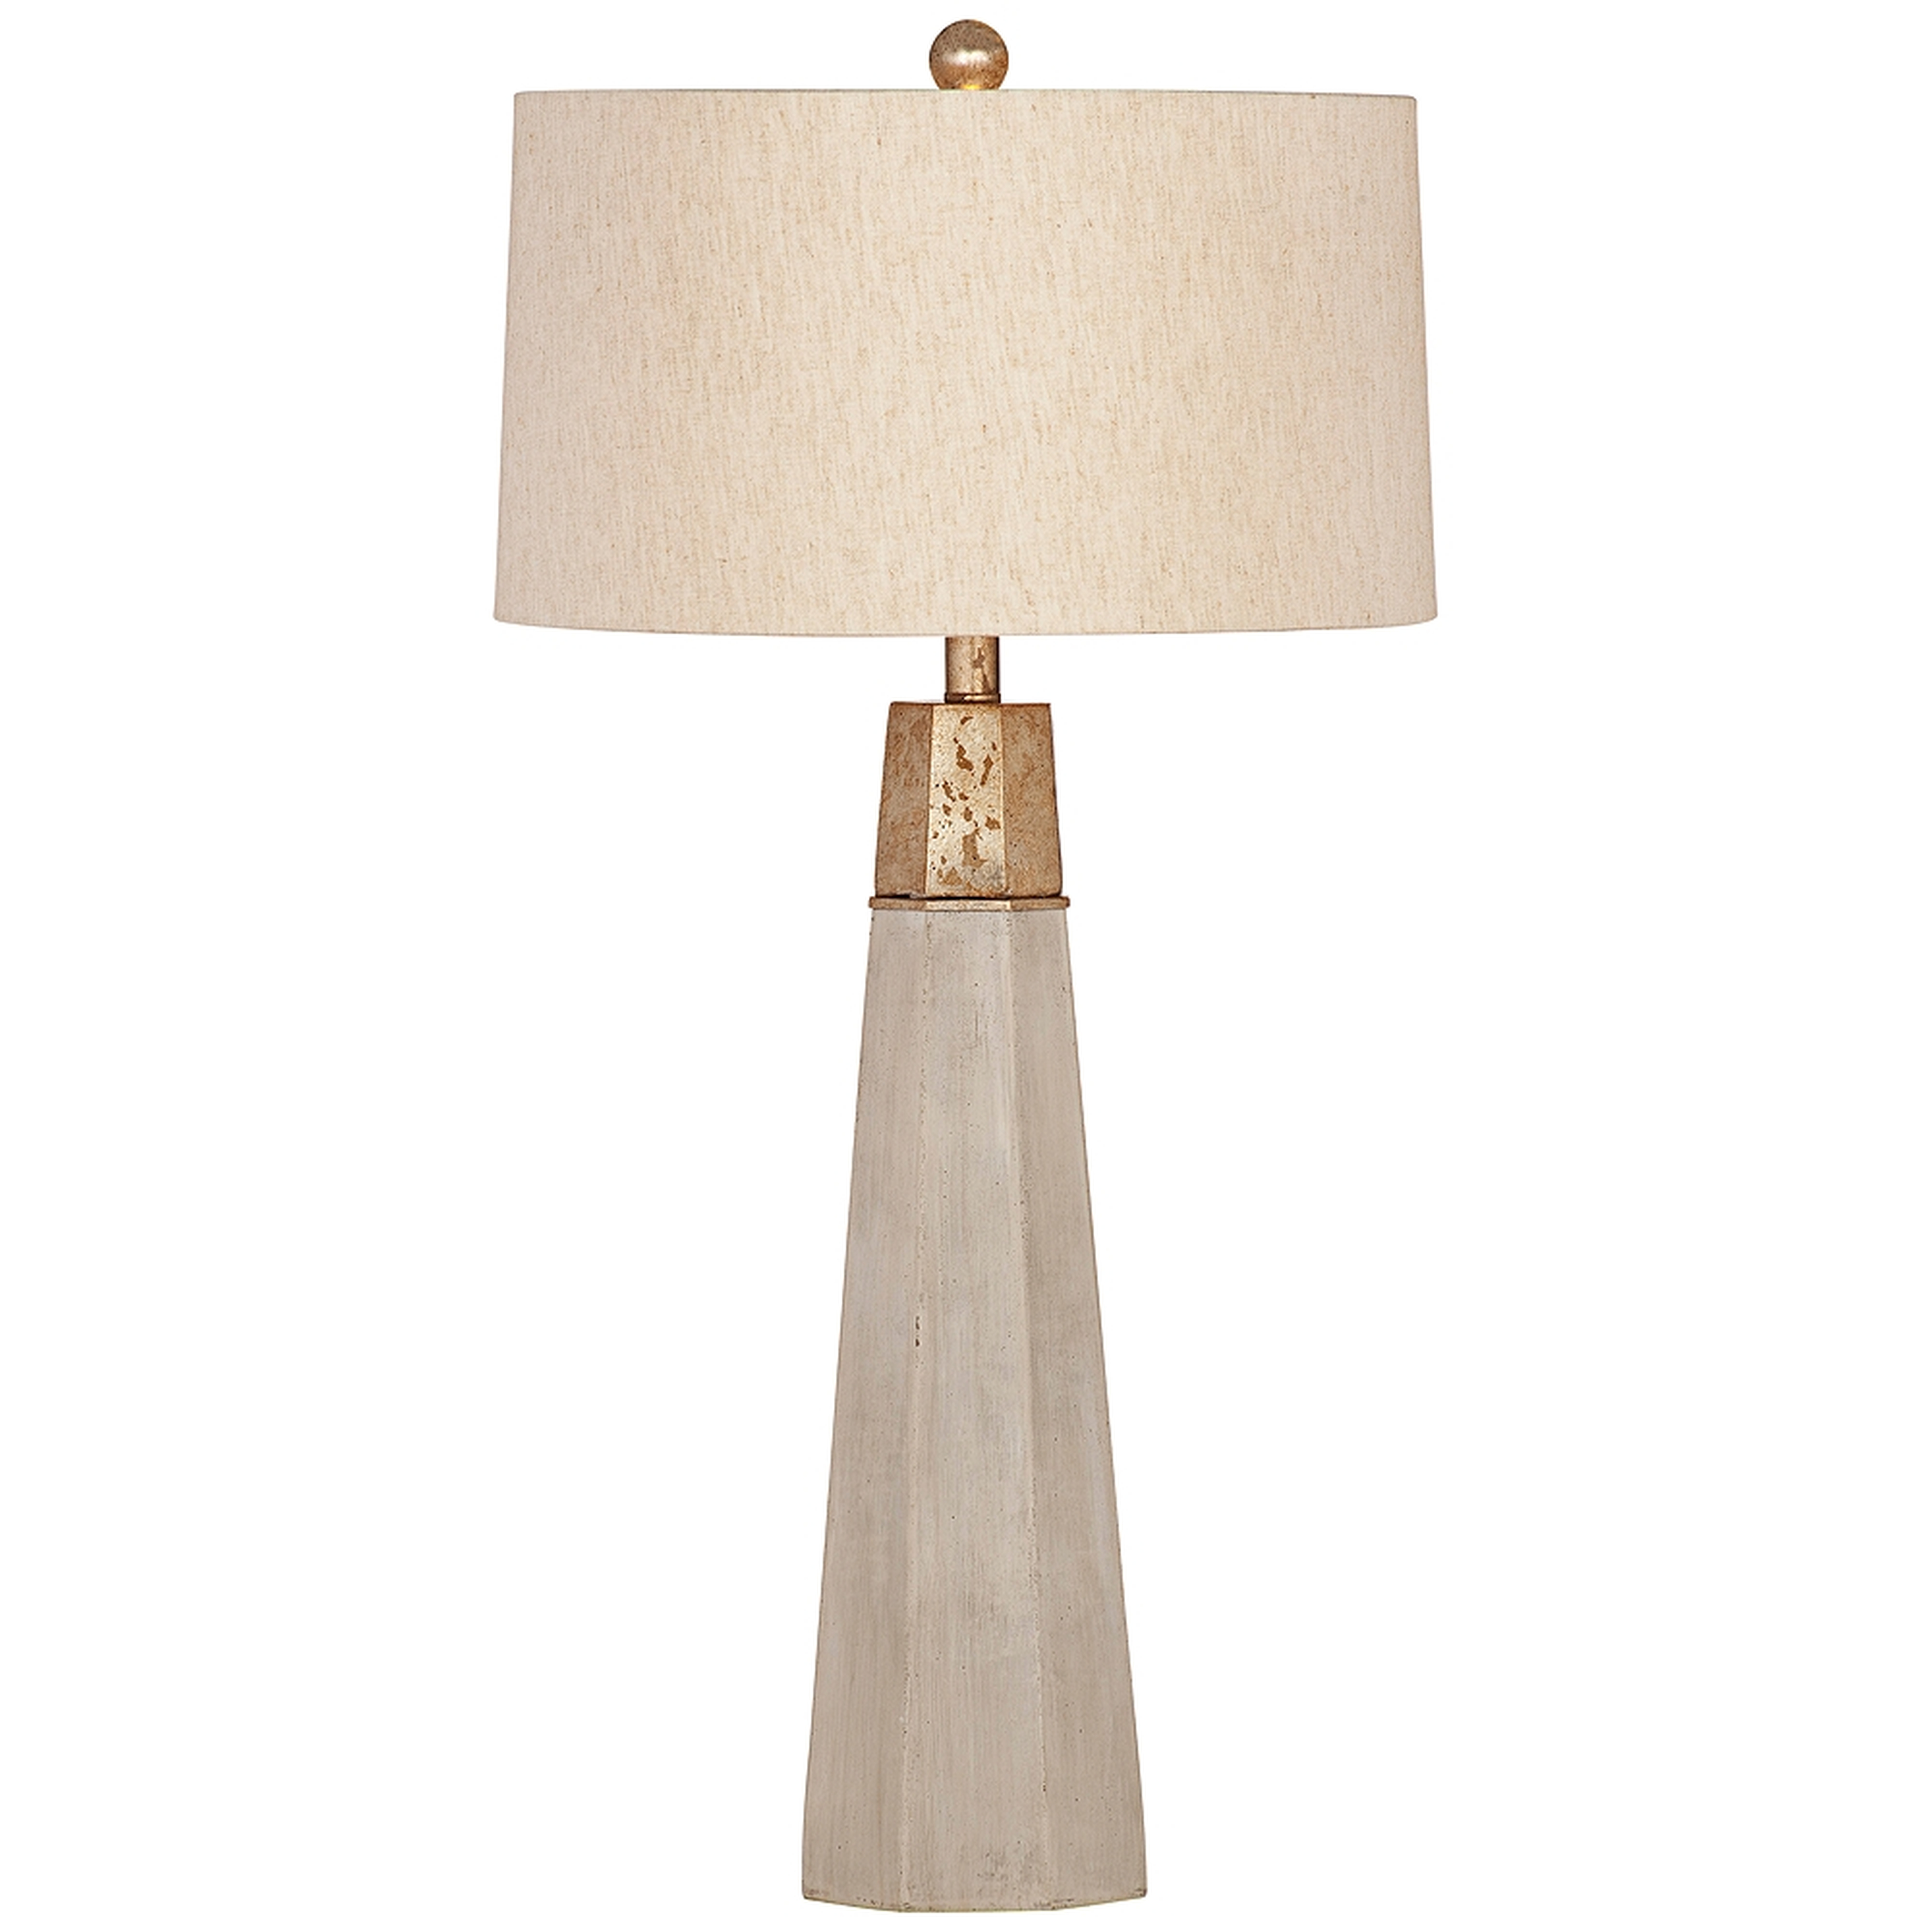 Rowan Natural Cement Table Lamp - Style # 58K95 - Lamps Plus